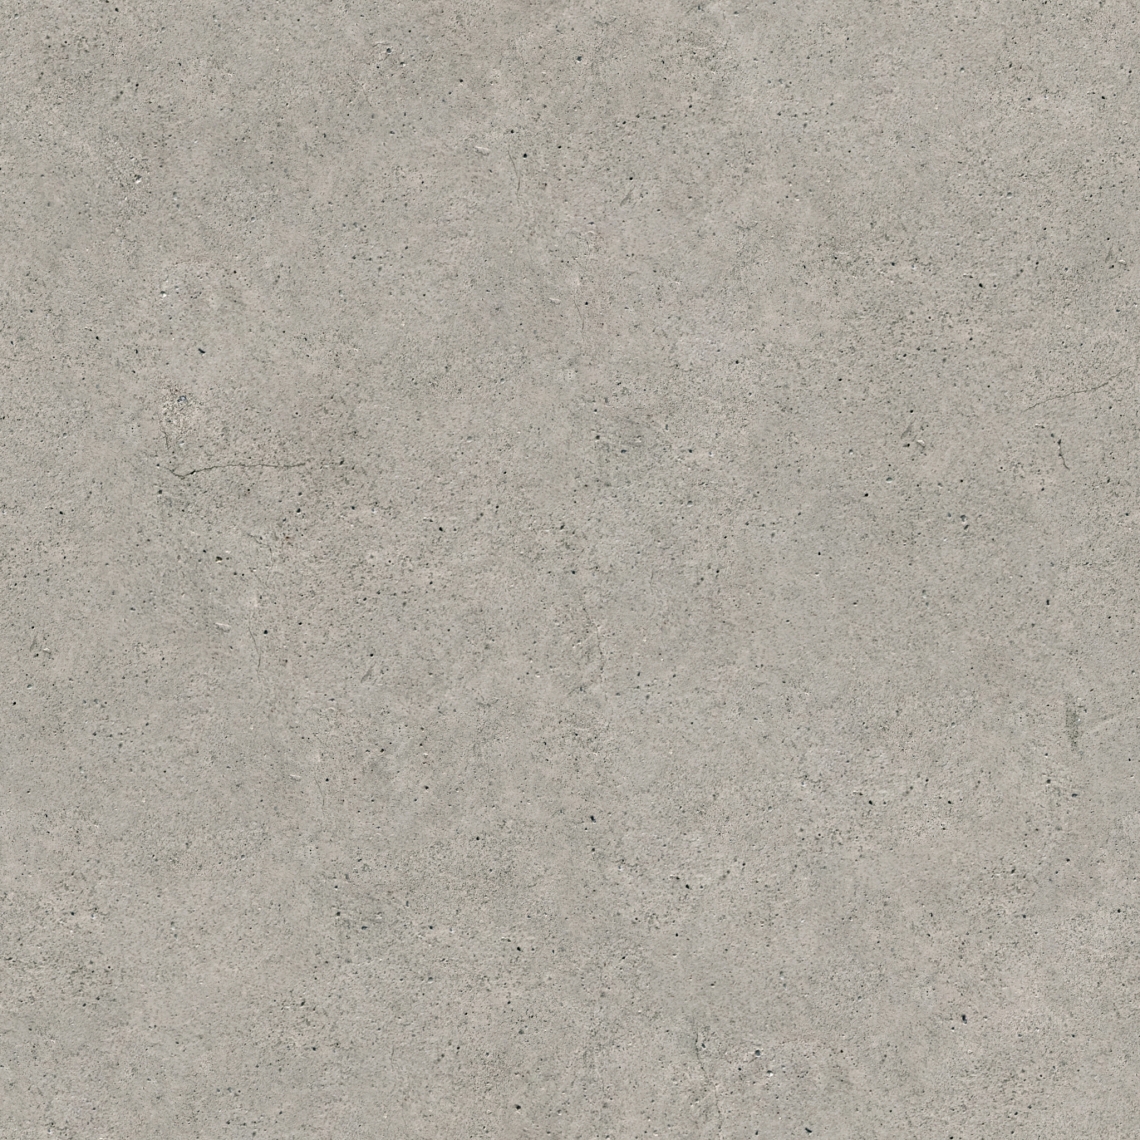 Seamless concrete texture - dudehoure